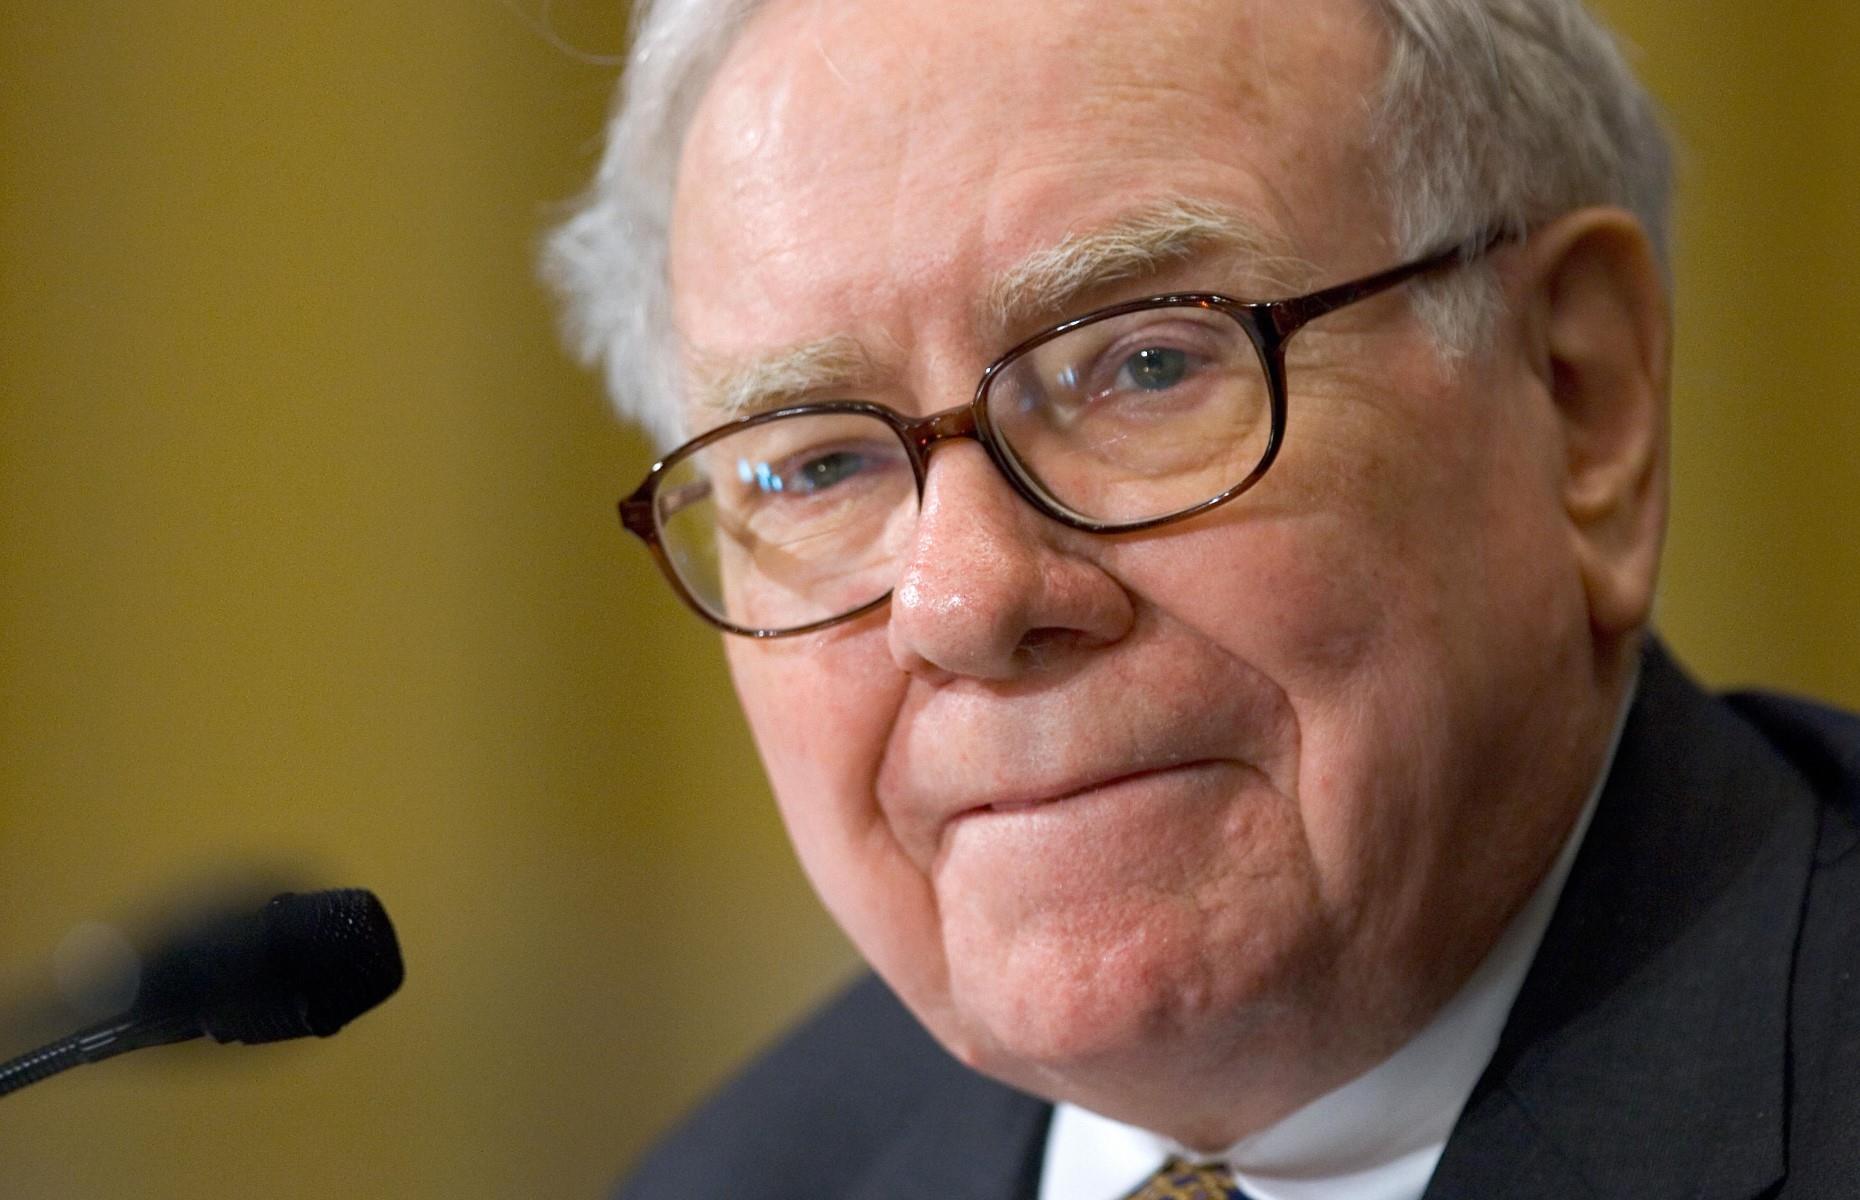 Warren Buffett’s Wells Fargo venture